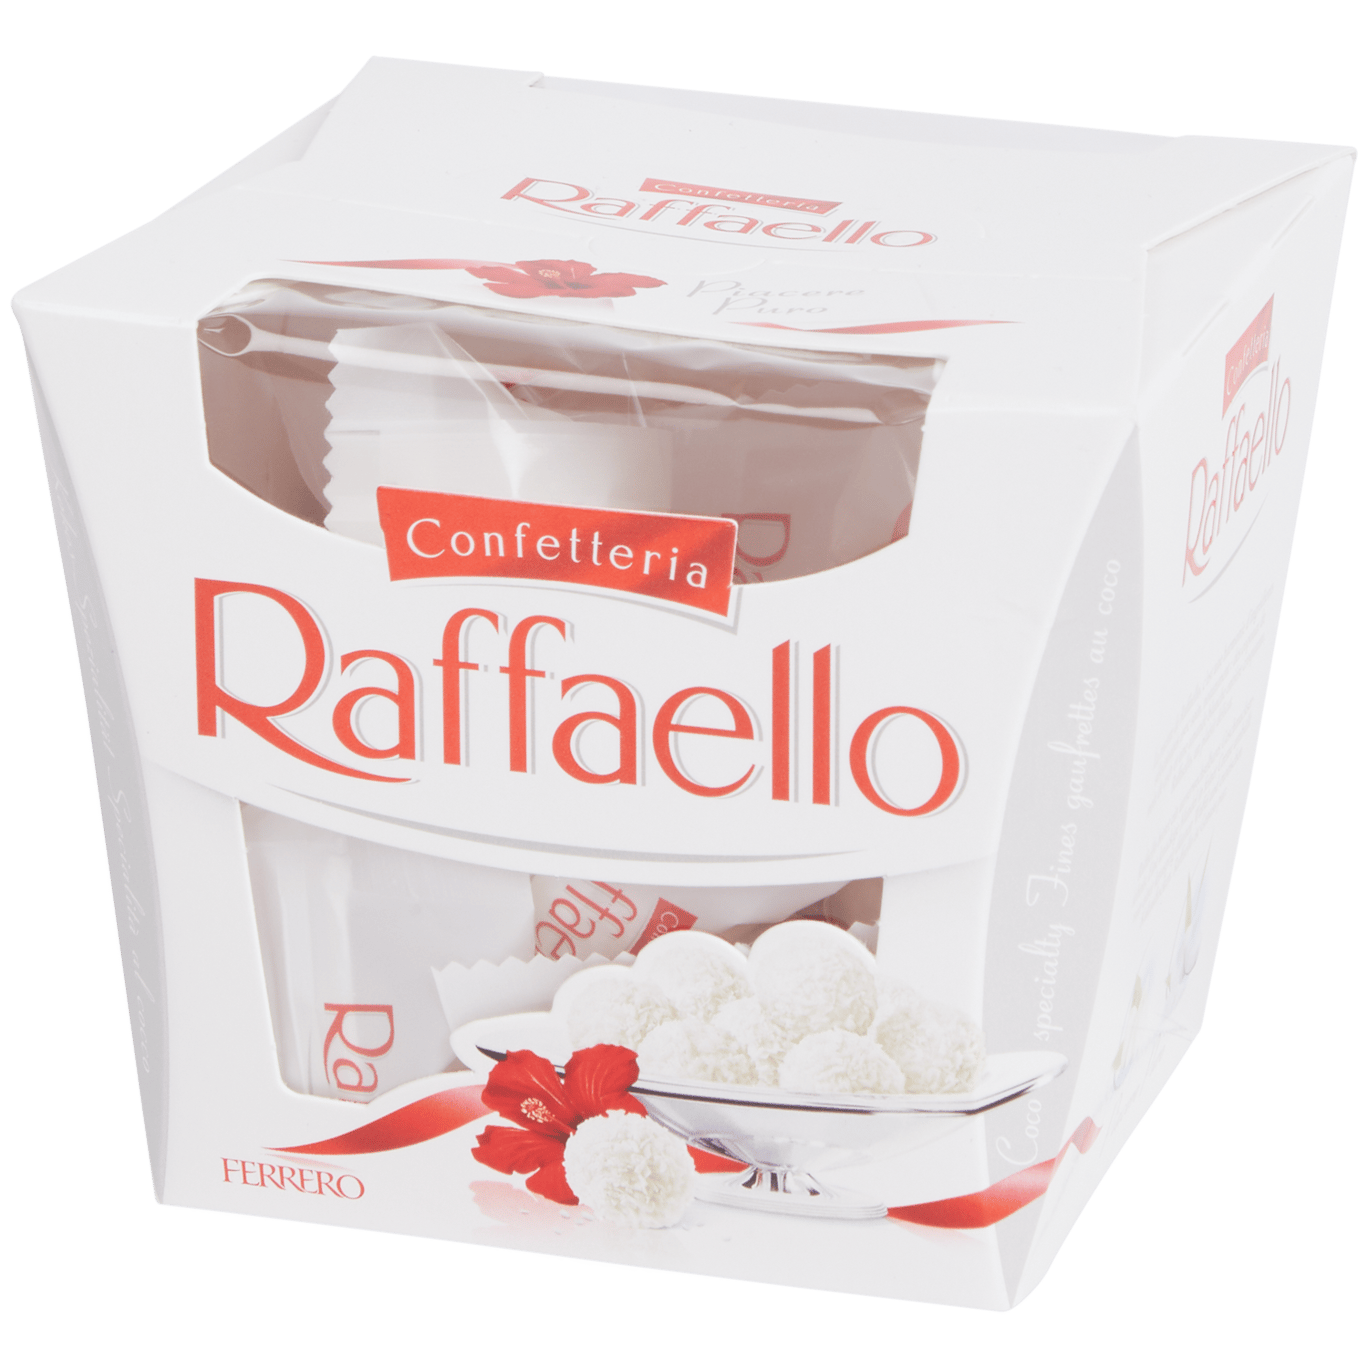 Raffaello Ferrero